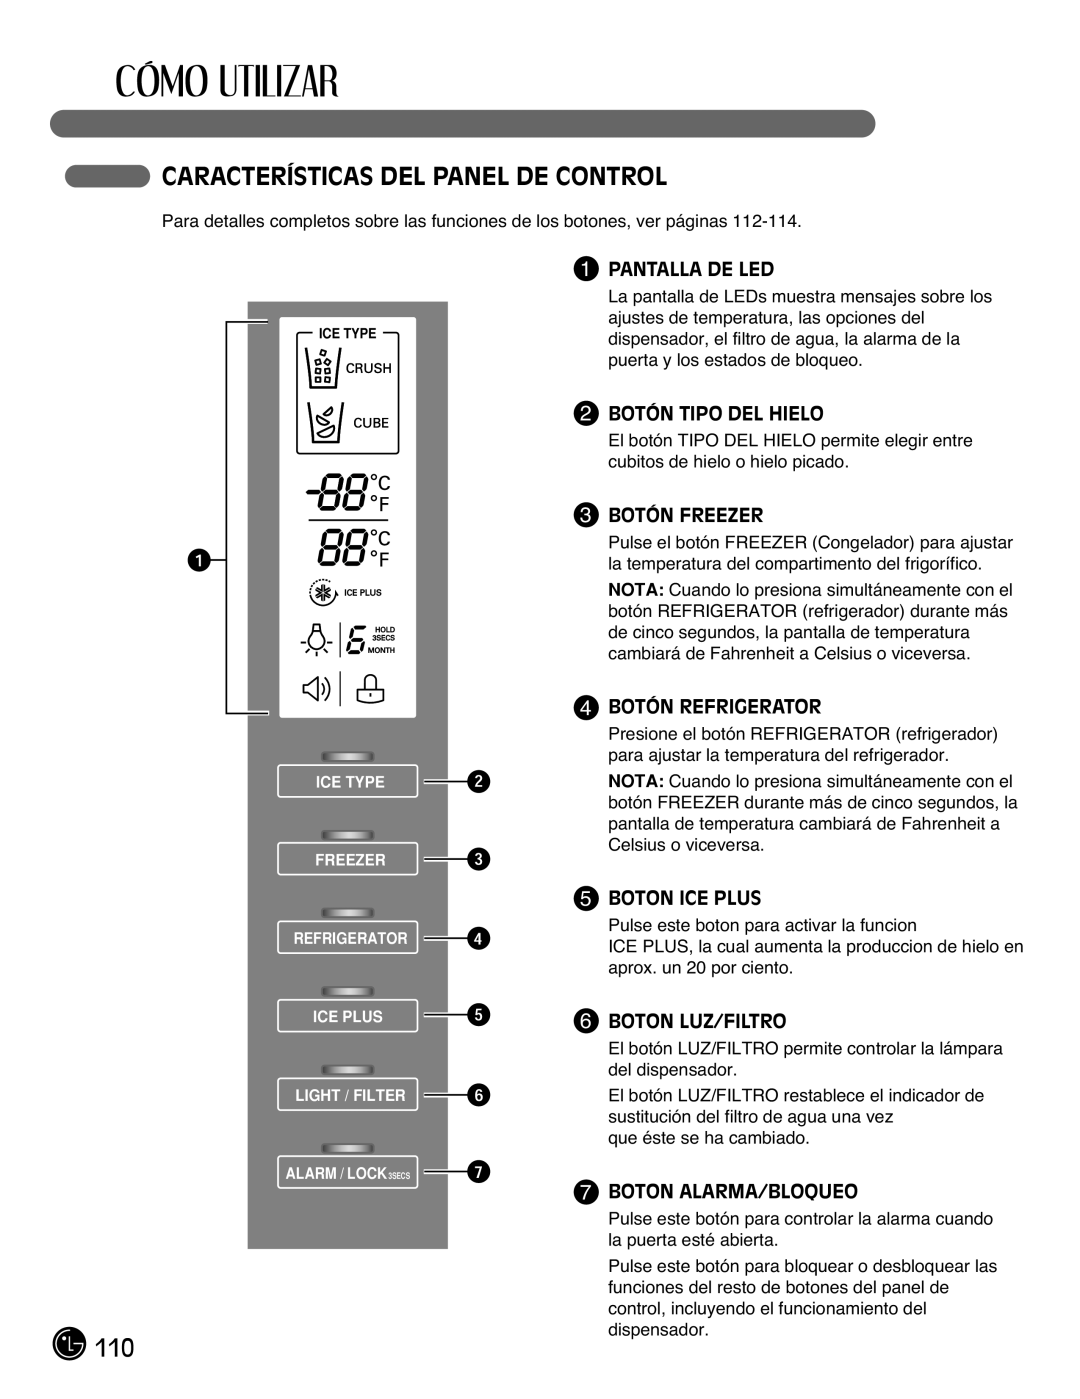 LG Electronics LMX21981** Características Del Panel De Control, 1PANTALLA DE LED, 2BOTÓN TIPO DEL HIELO, 3BOTÓN FREEZER 